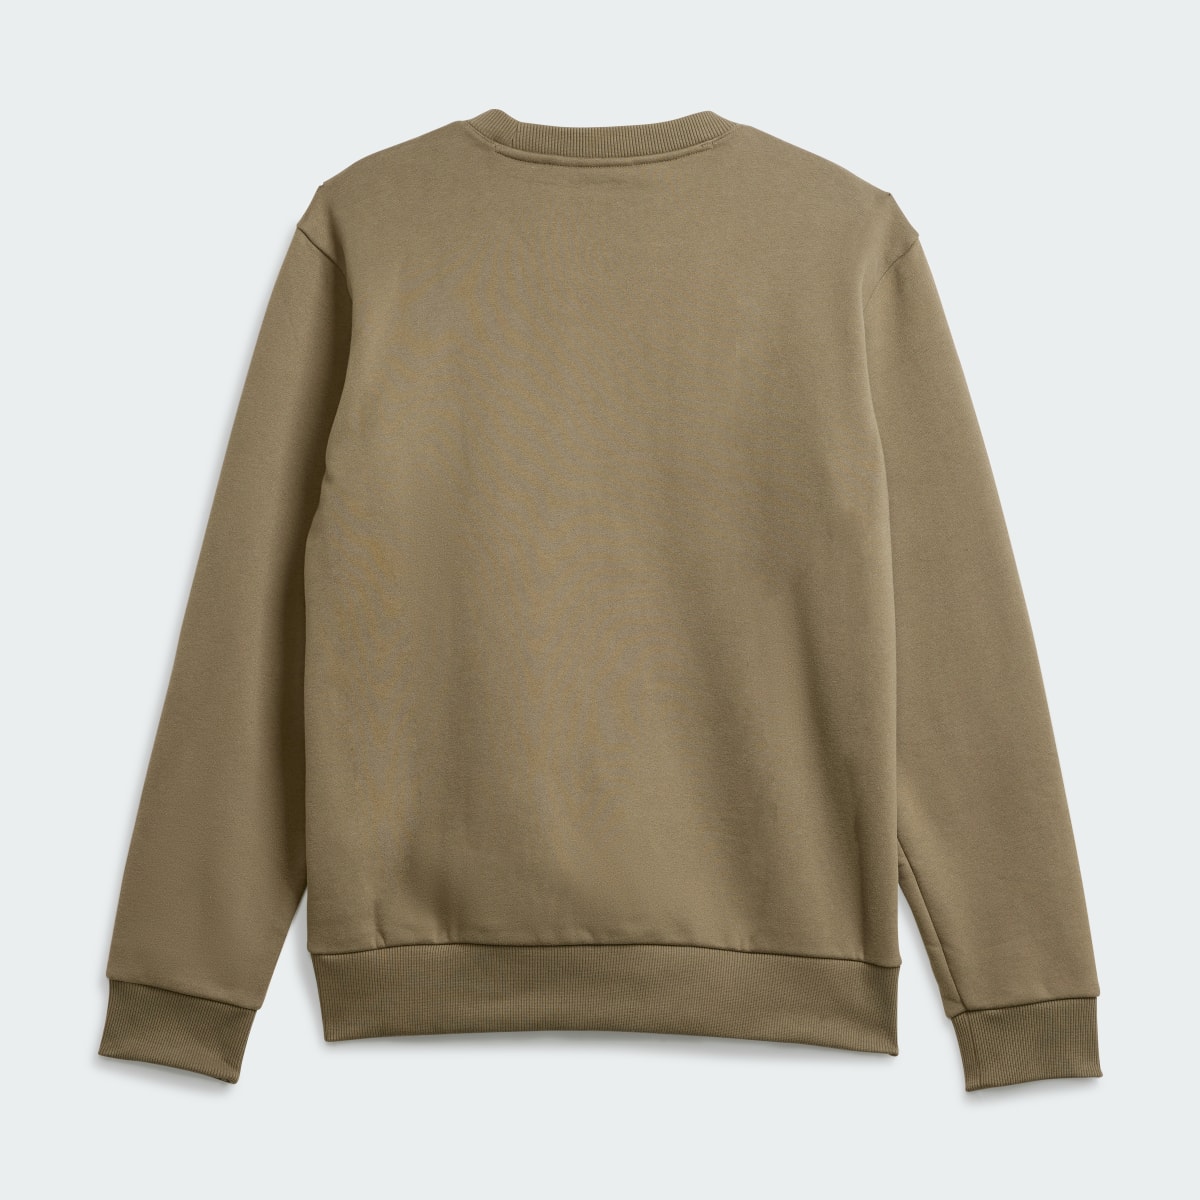 Adidas Mod Trefoil Sweatshirt. 6